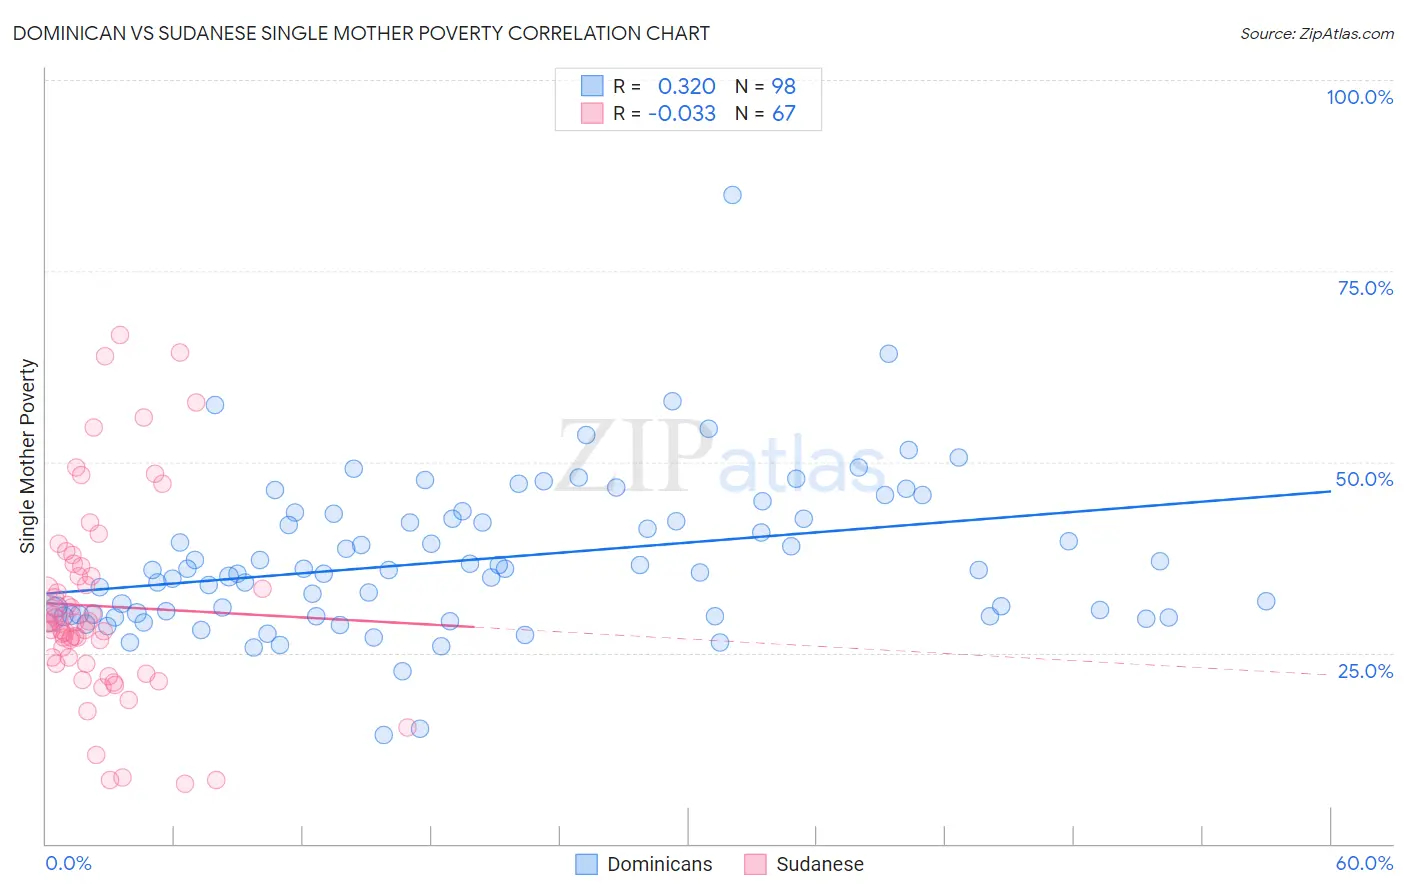 Dominican vs Sudanese Single Mother Poverty